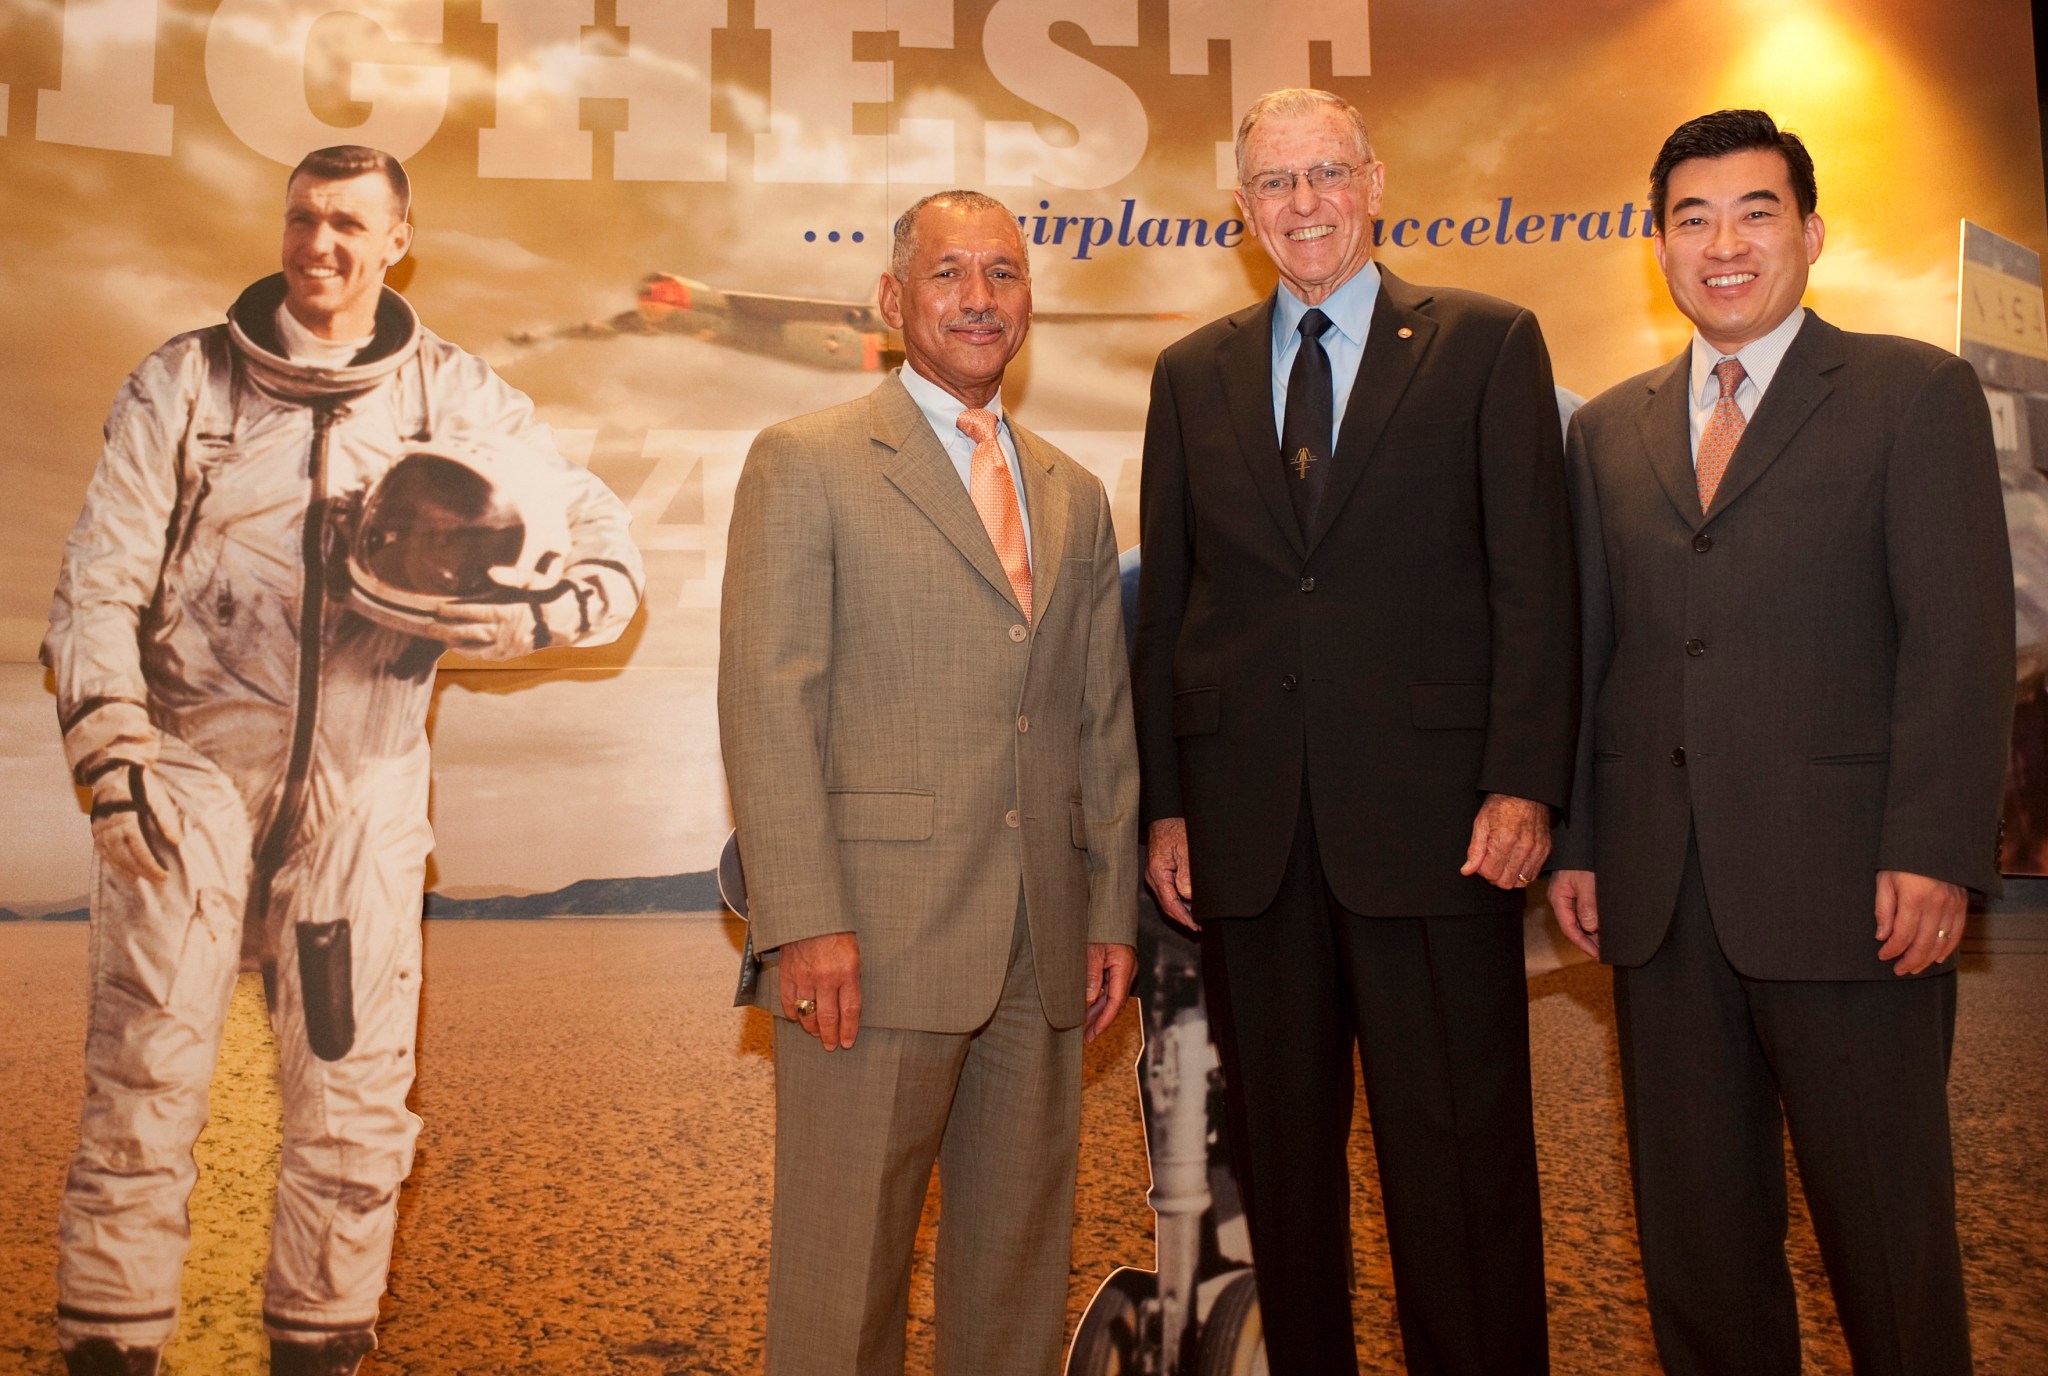 X-15 pilot Joe Engle standing in between Dr. Shin and NASA Administrator Charlie Bolden.